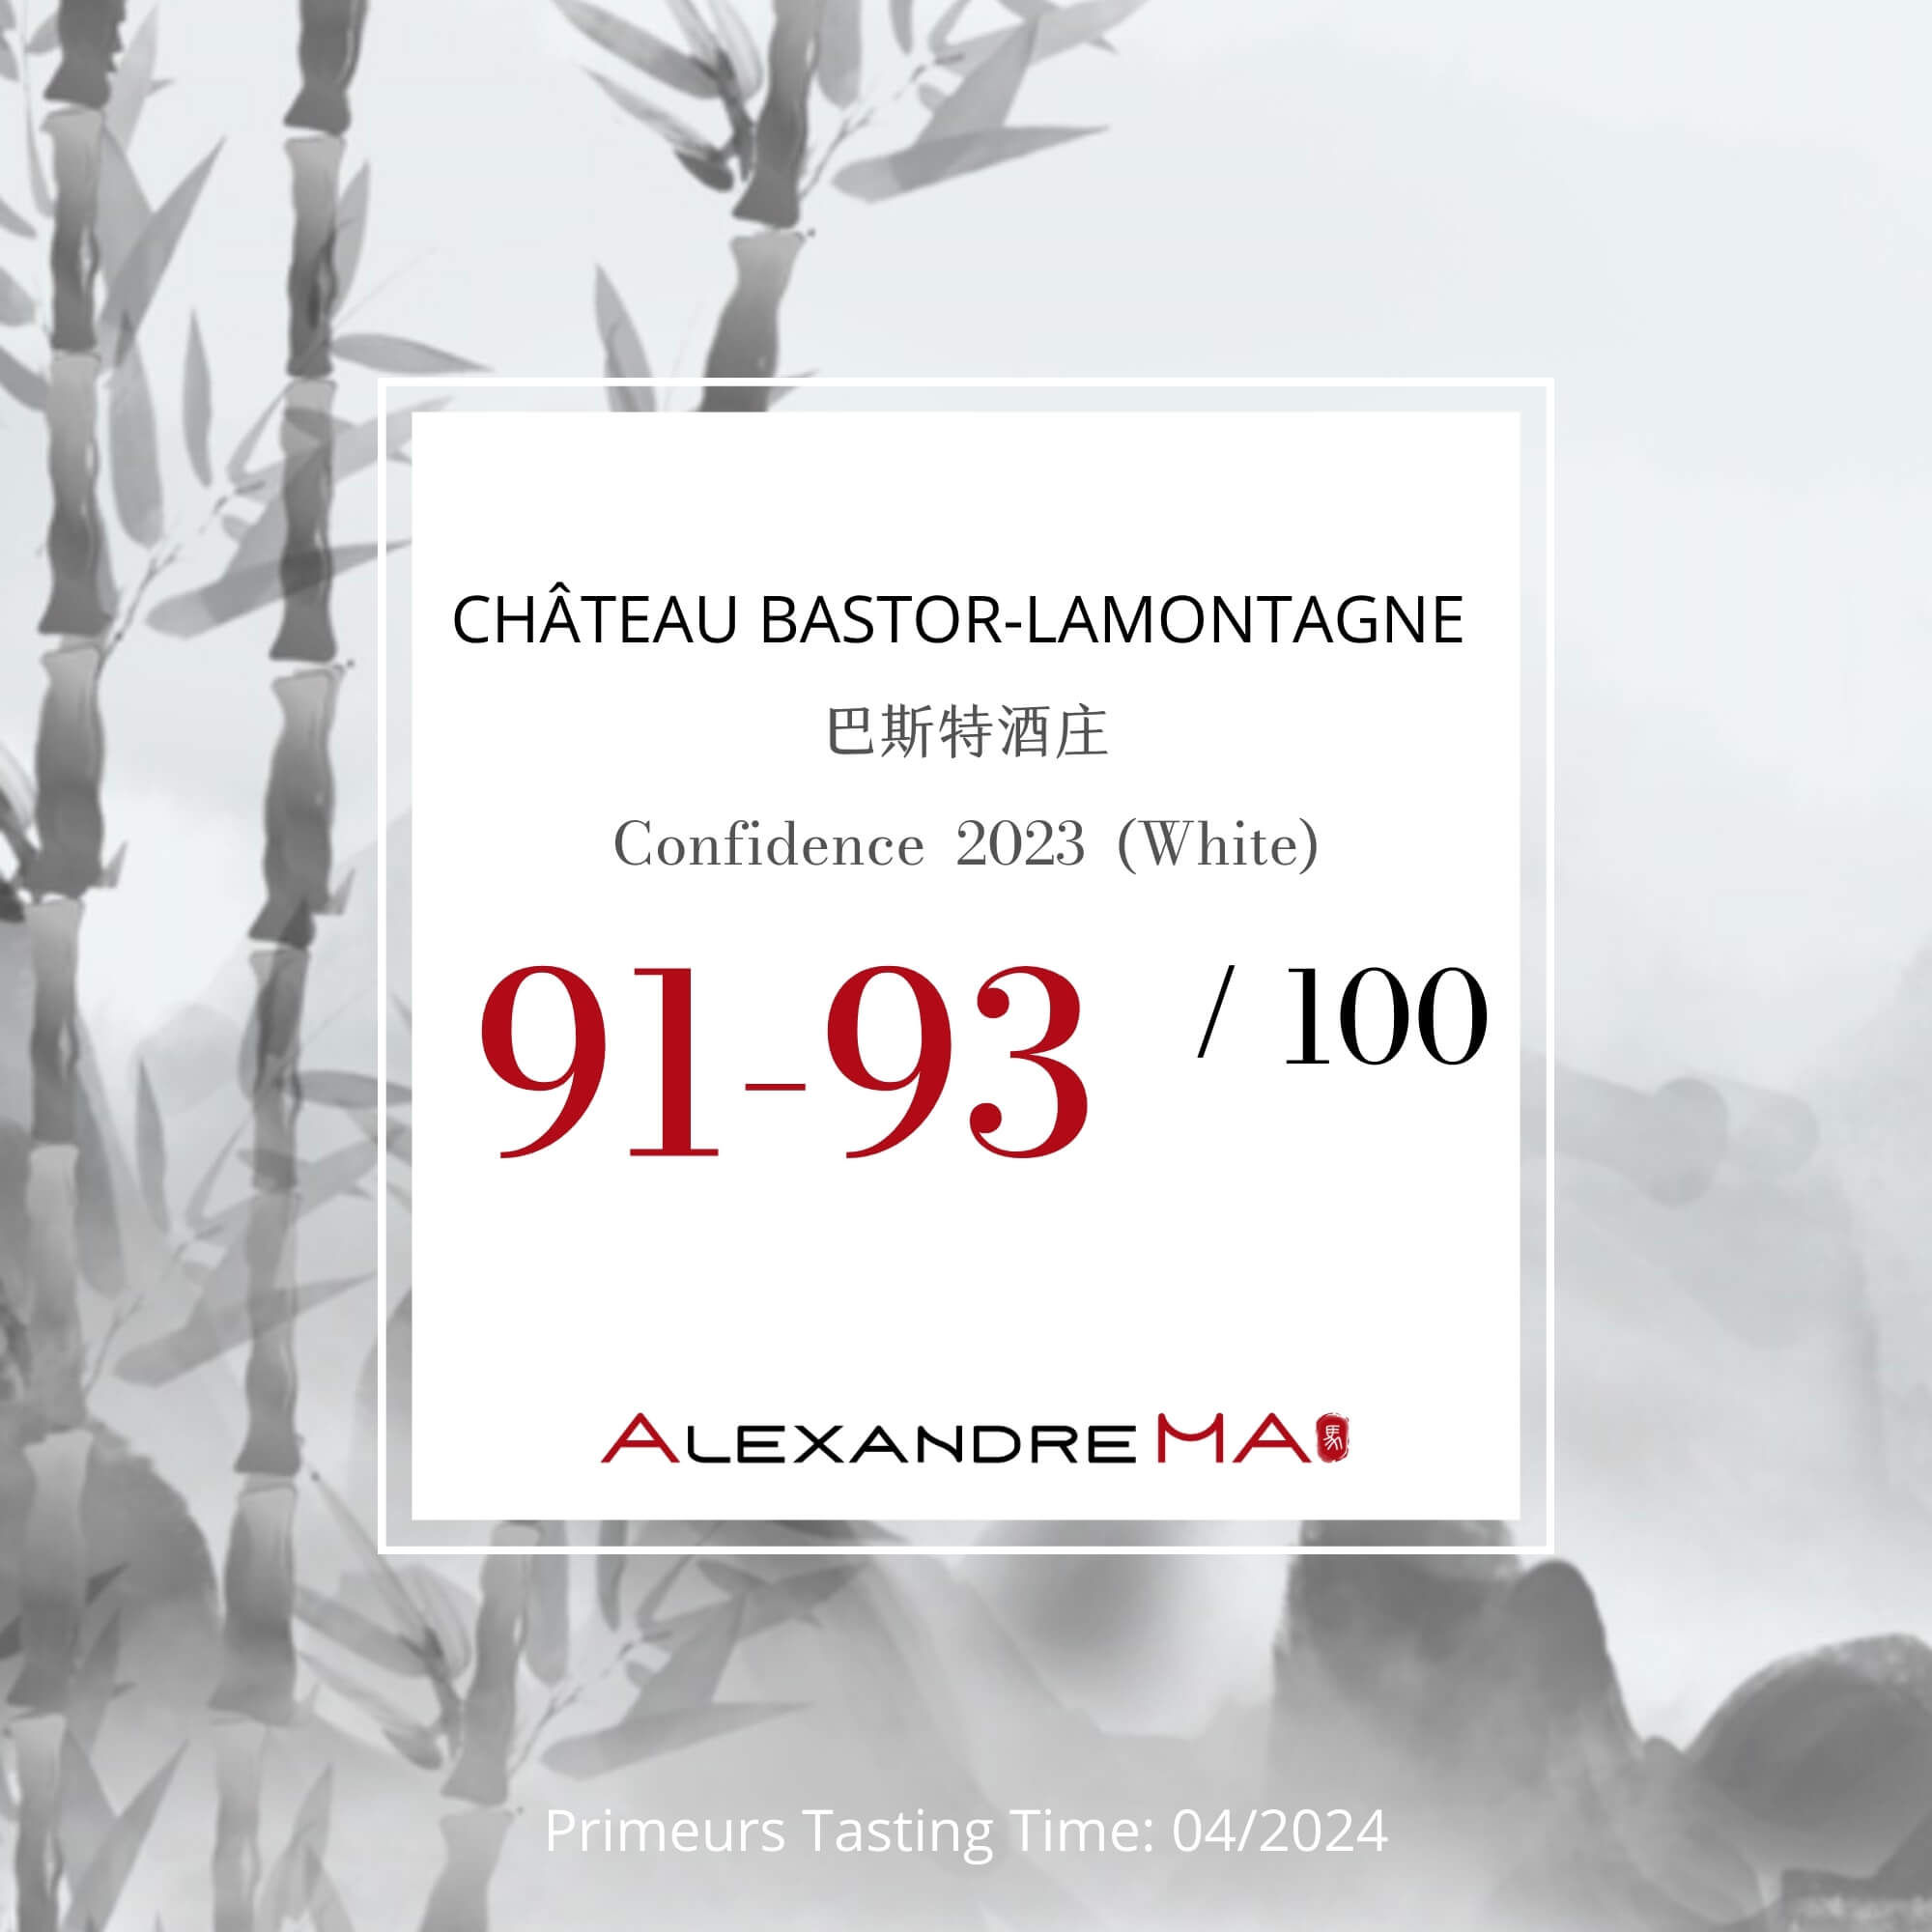 Château Bastor-Lamontagne 巴斯特酒庄-Confidence 2023-White Primeurs - Alexandre Ma